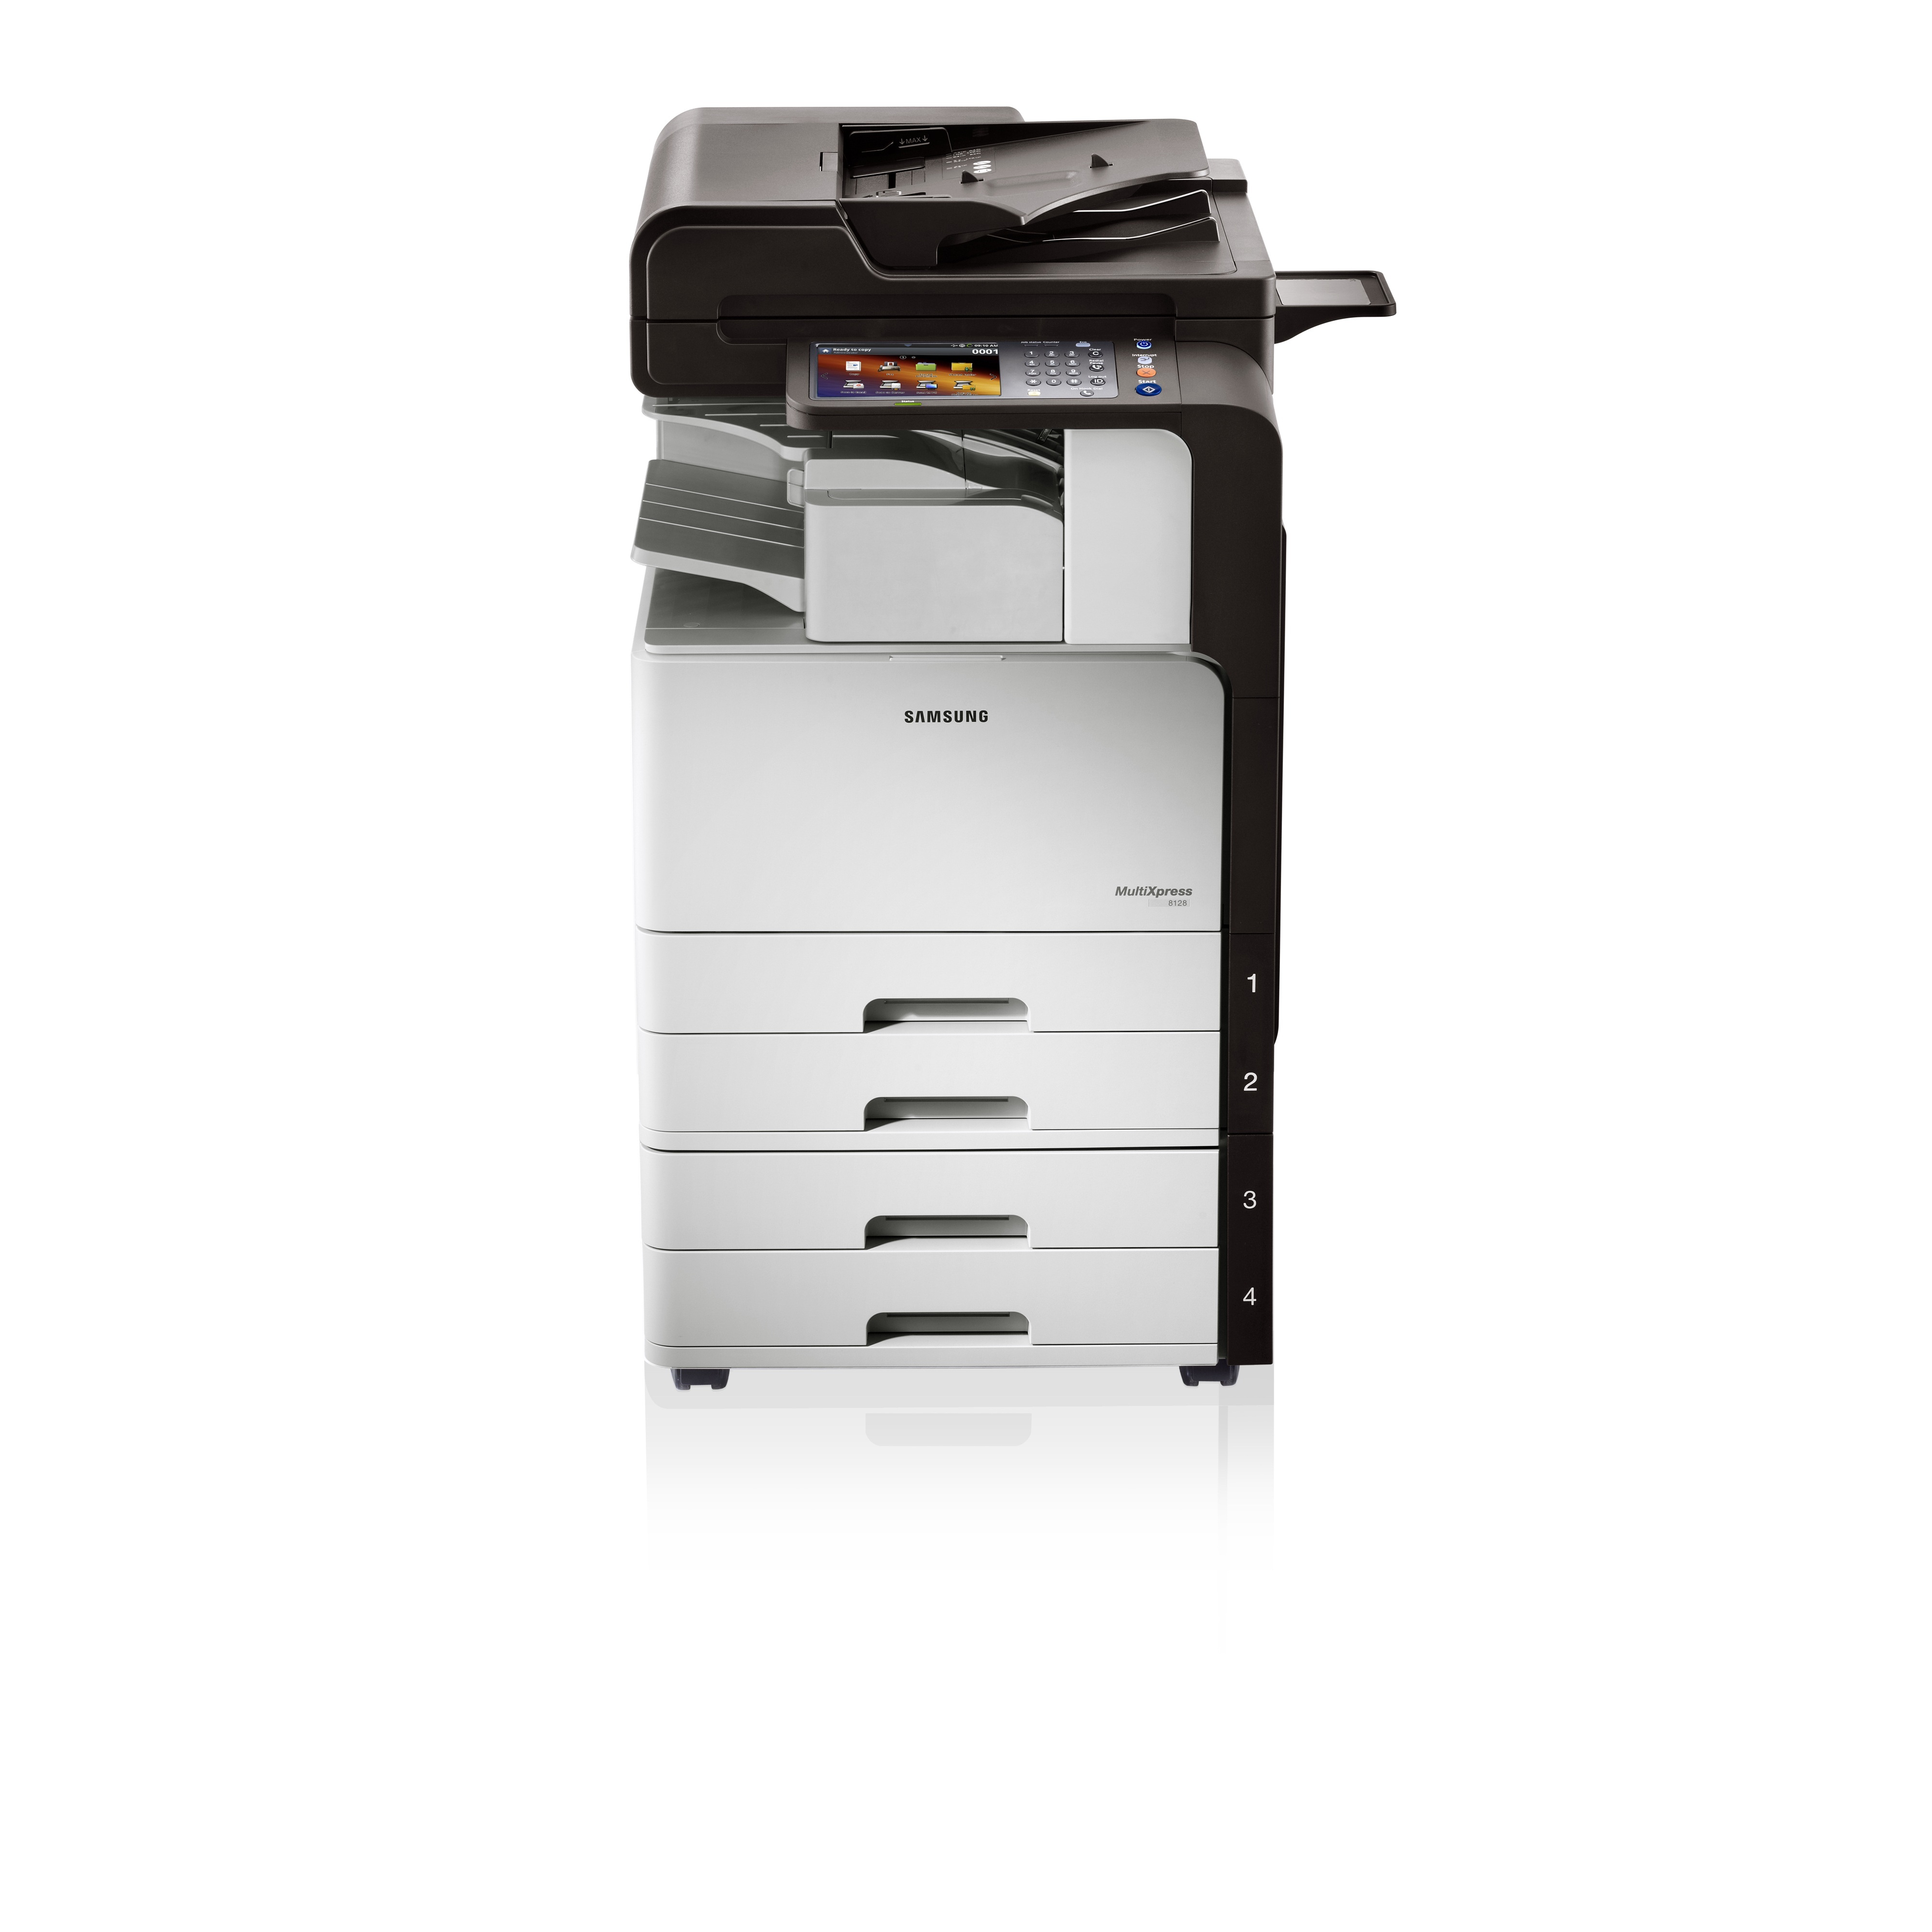 Samsung MultiXpress SCX-8120 Laser Multifunction Printer series